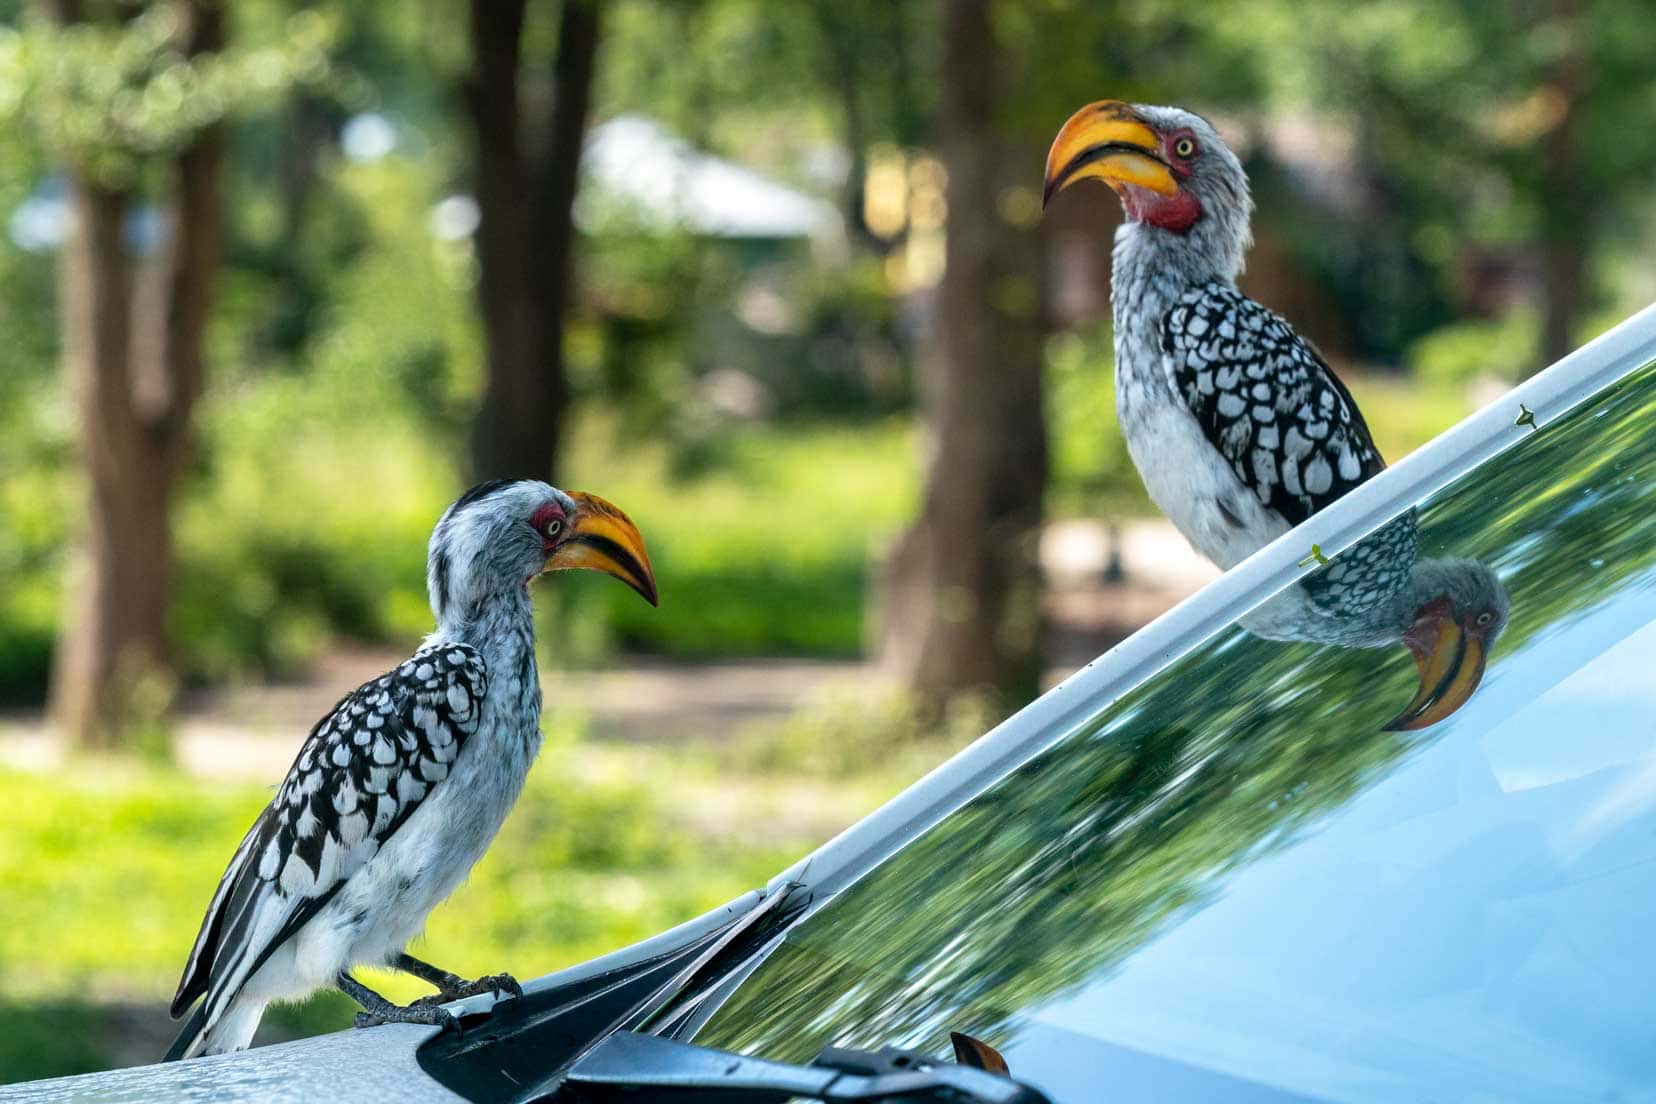 Hornbills enjoying their reflection in the windscreen